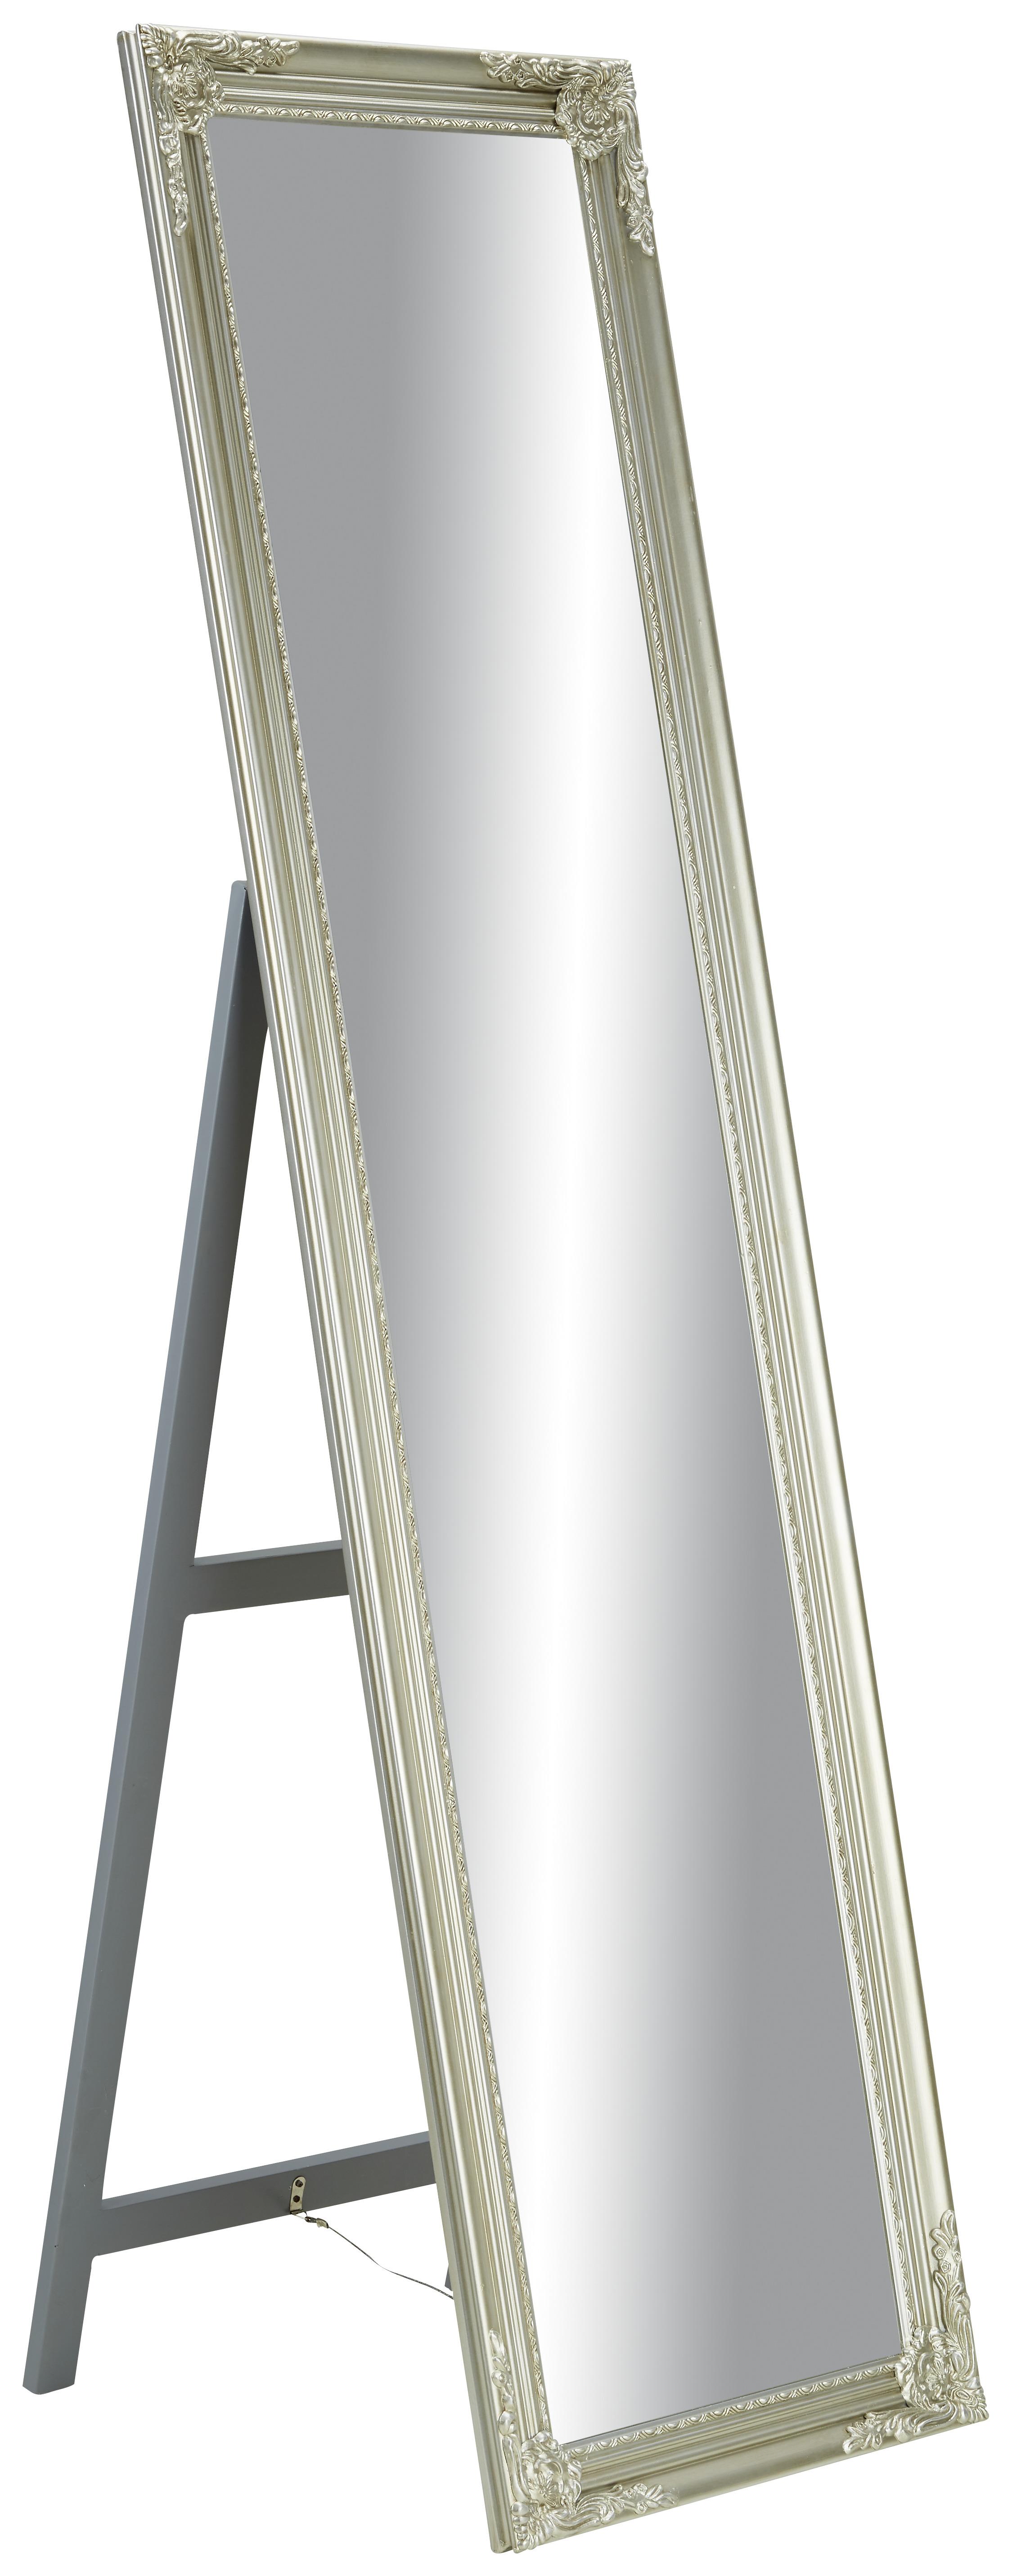 Samostojeće Ogledalo Barock - srebrne boje, Romantik / Landhaus, staklo/drvo (45/170/5cm) - Modern Living